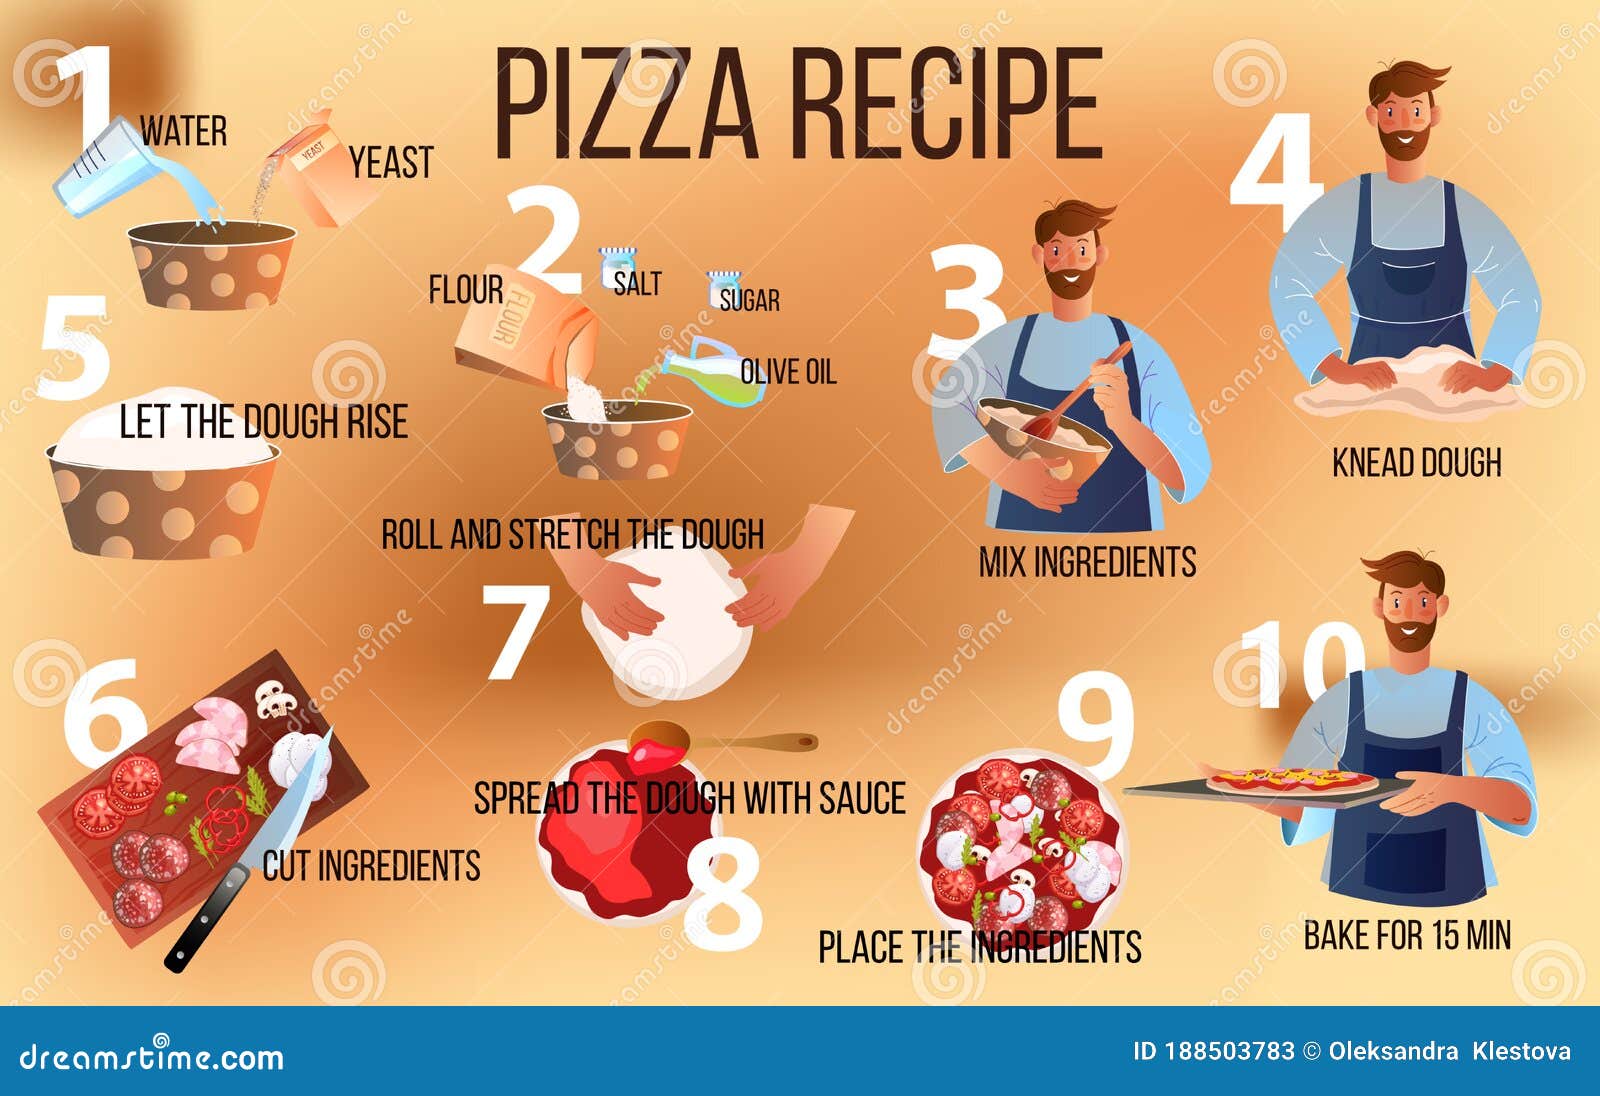 Homemade Pizza Recipe Vector Illustration with Bearded Man